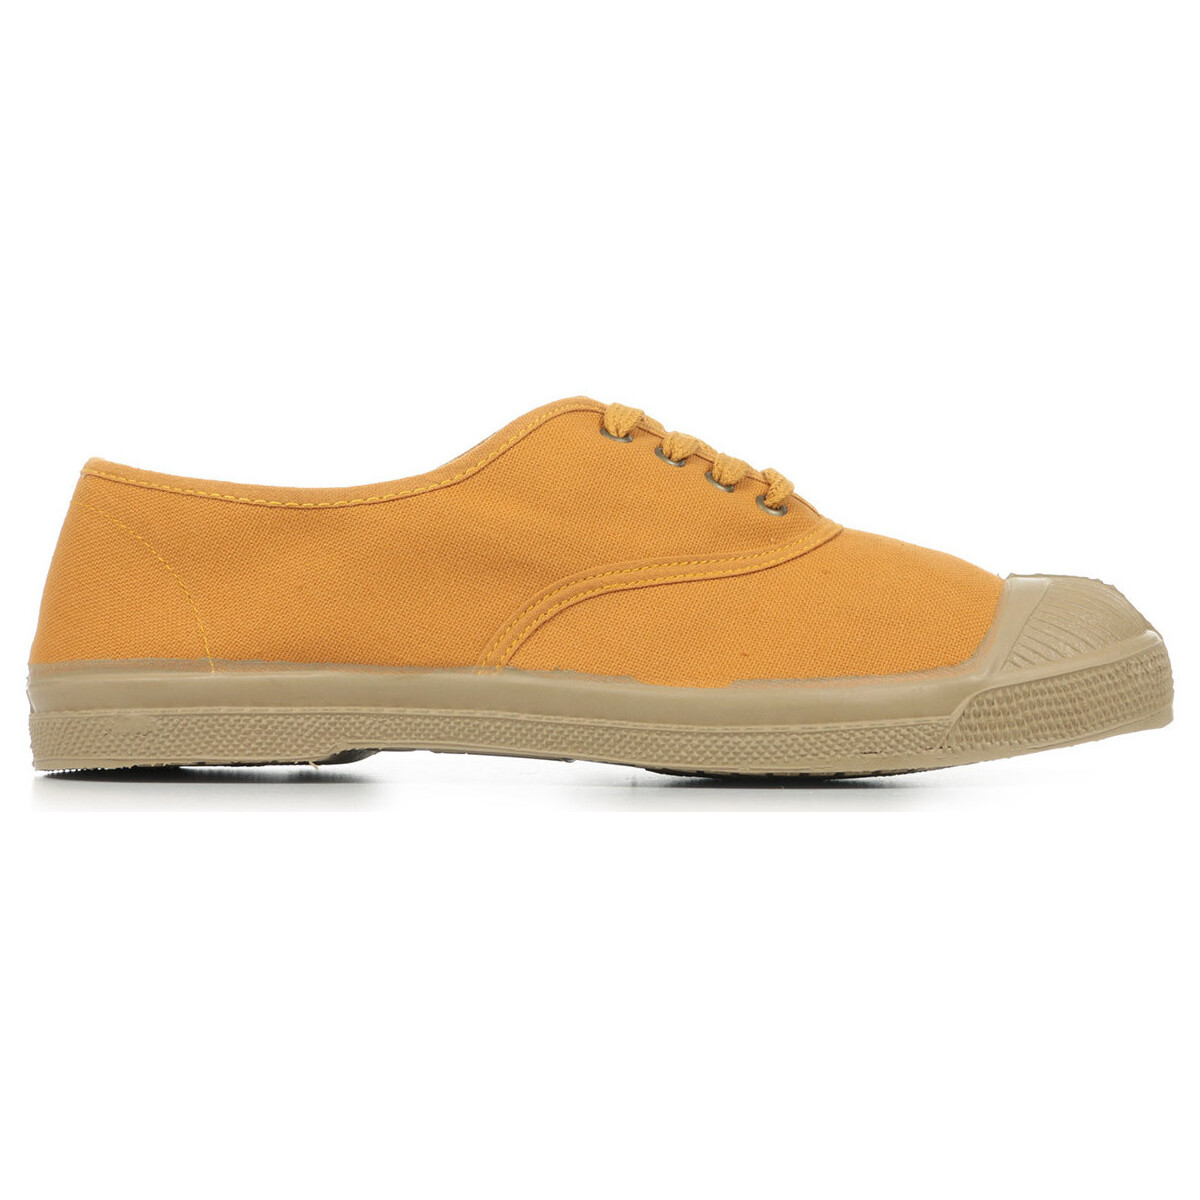 Schoenen Dames Sneakers Bensimon Colorsole Oranje